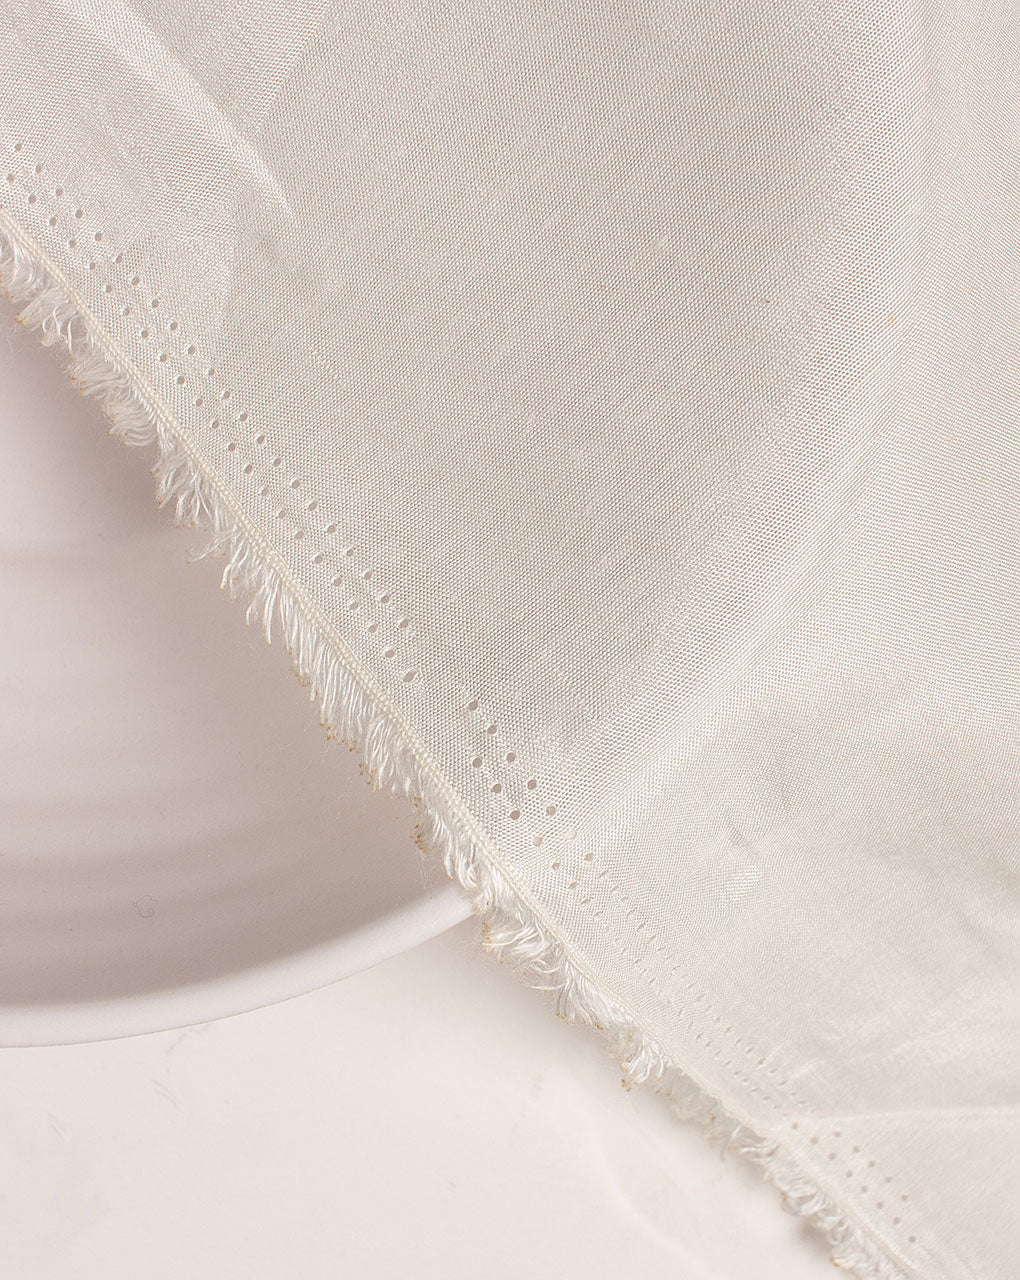 Dyeable Liva Excel Viscose ( Royal Silk ) Fabric - Fabriclore.com